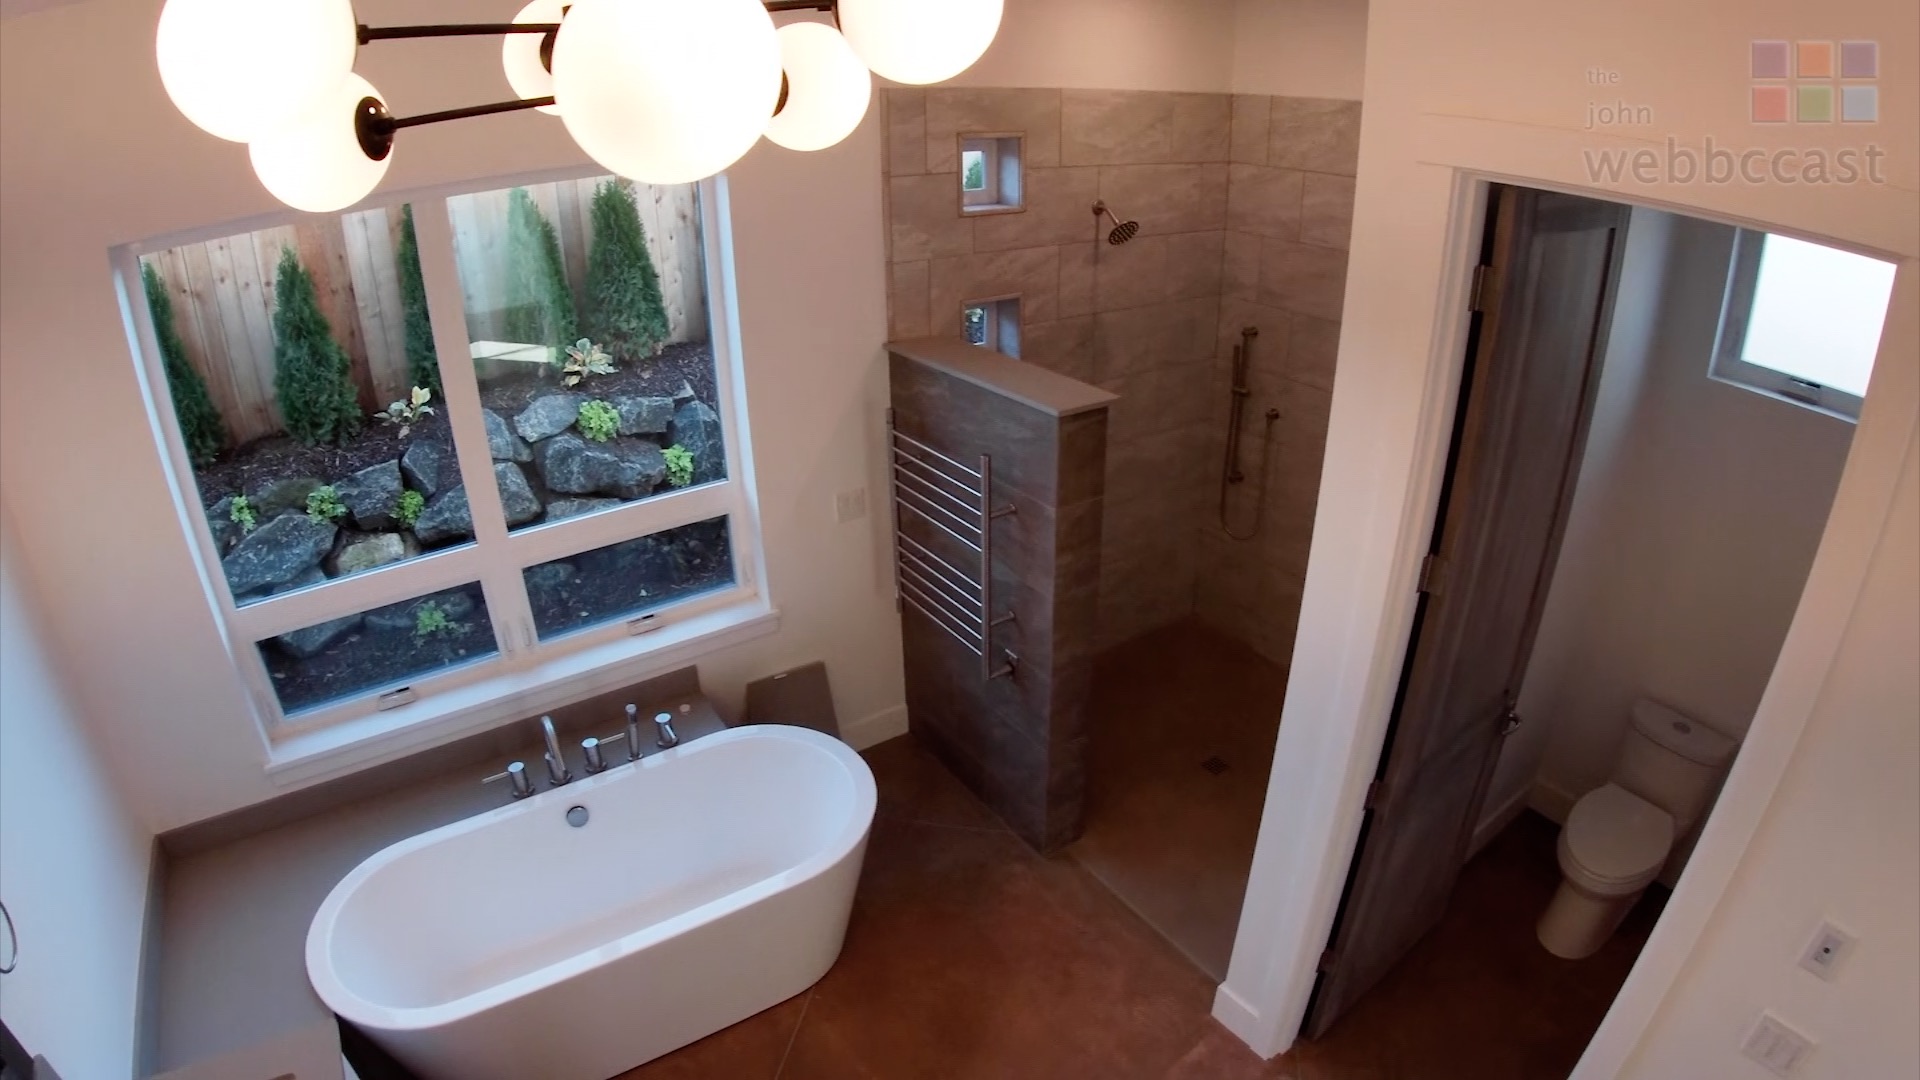 New Home Design - Hatfield - IKEA Master Bath GoPro Overview 1